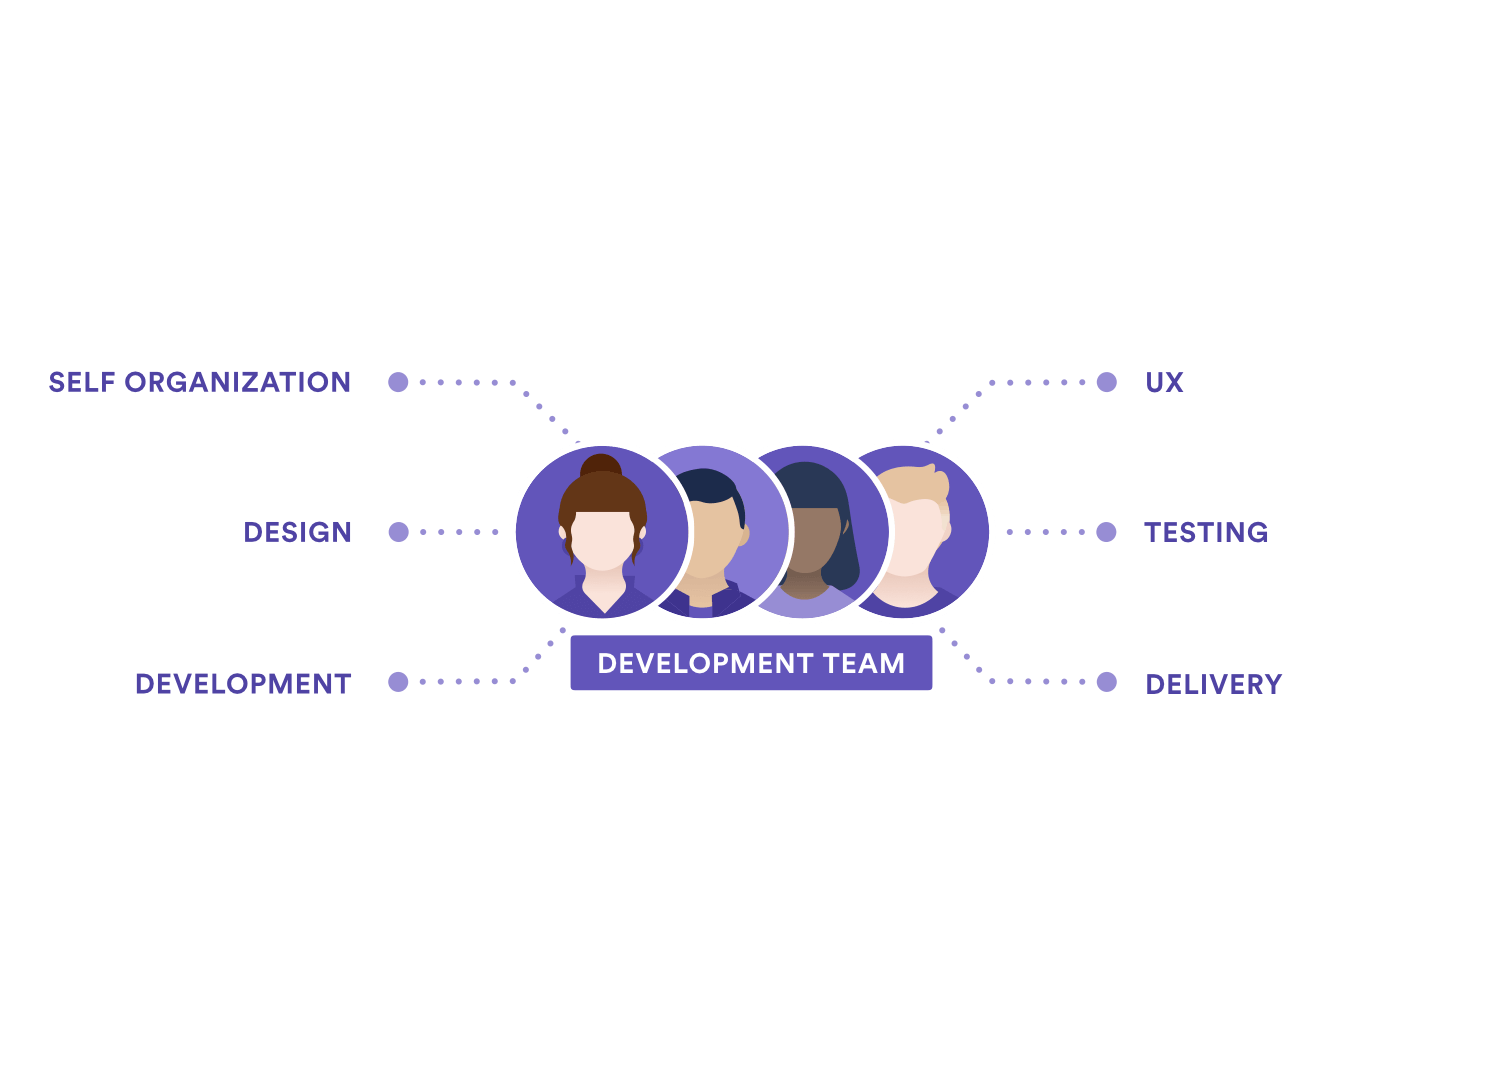 A diagram showing the development team's responsibilities: Self organization, design, development, UX, testing, deployment.